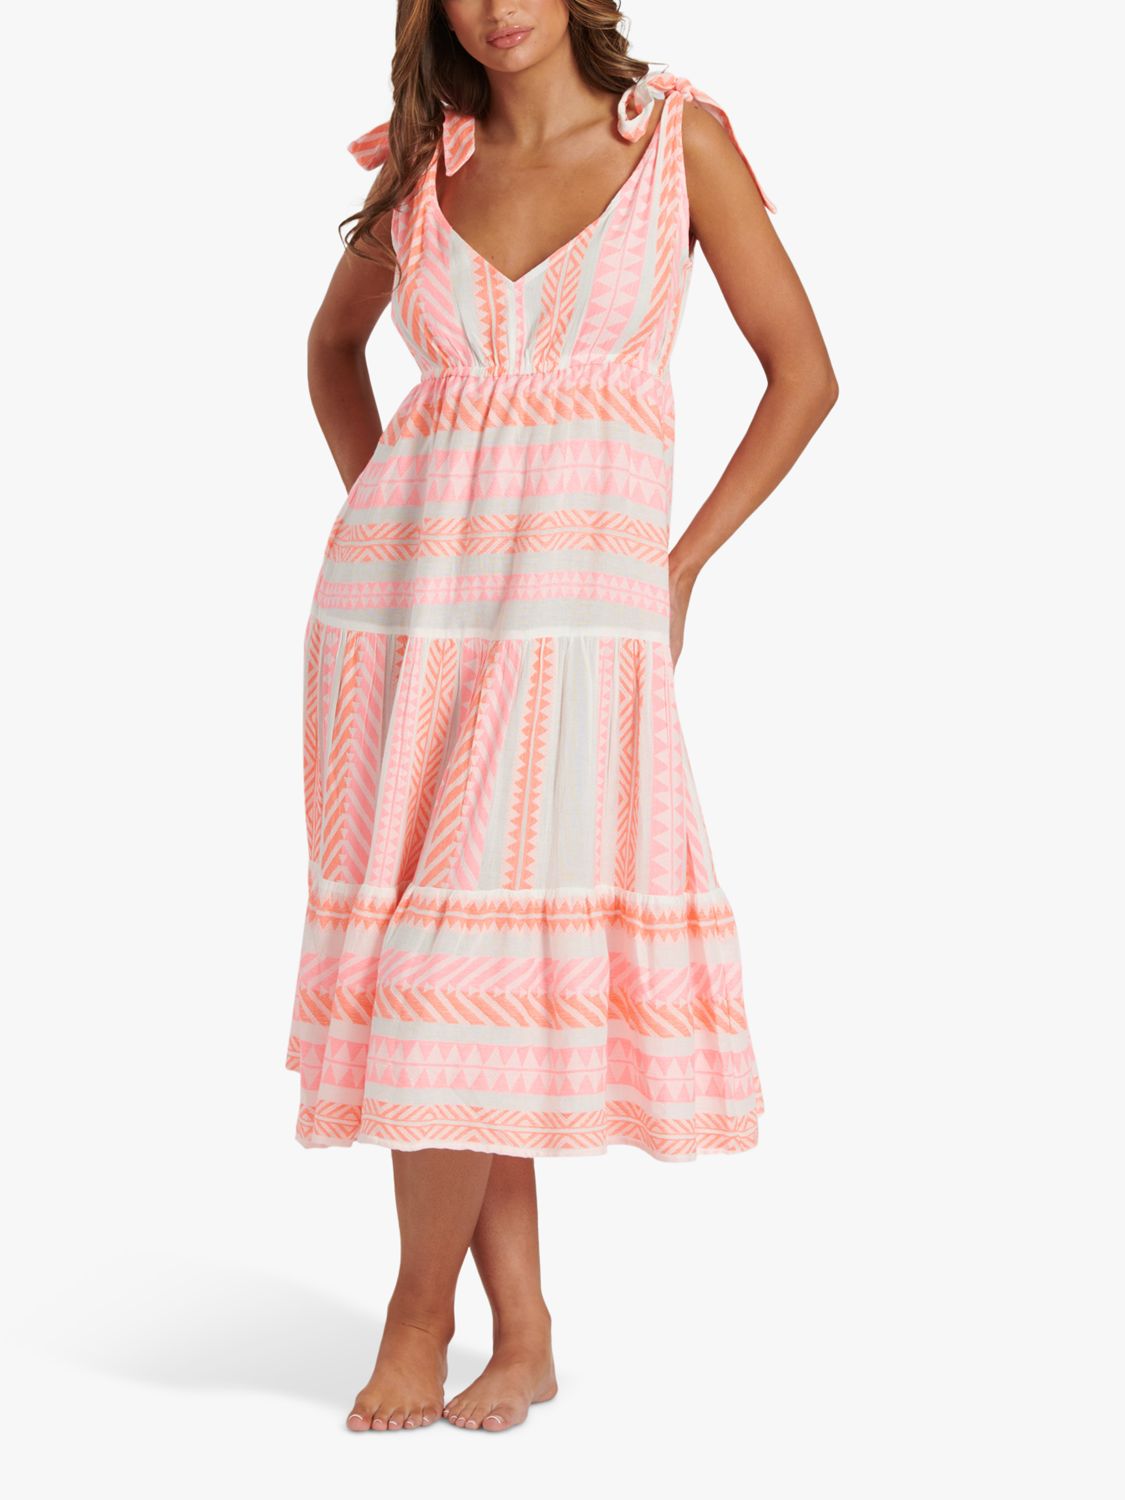 South Beach Jacquard Tie Shoulder Midi Dress, Pink/White, 8